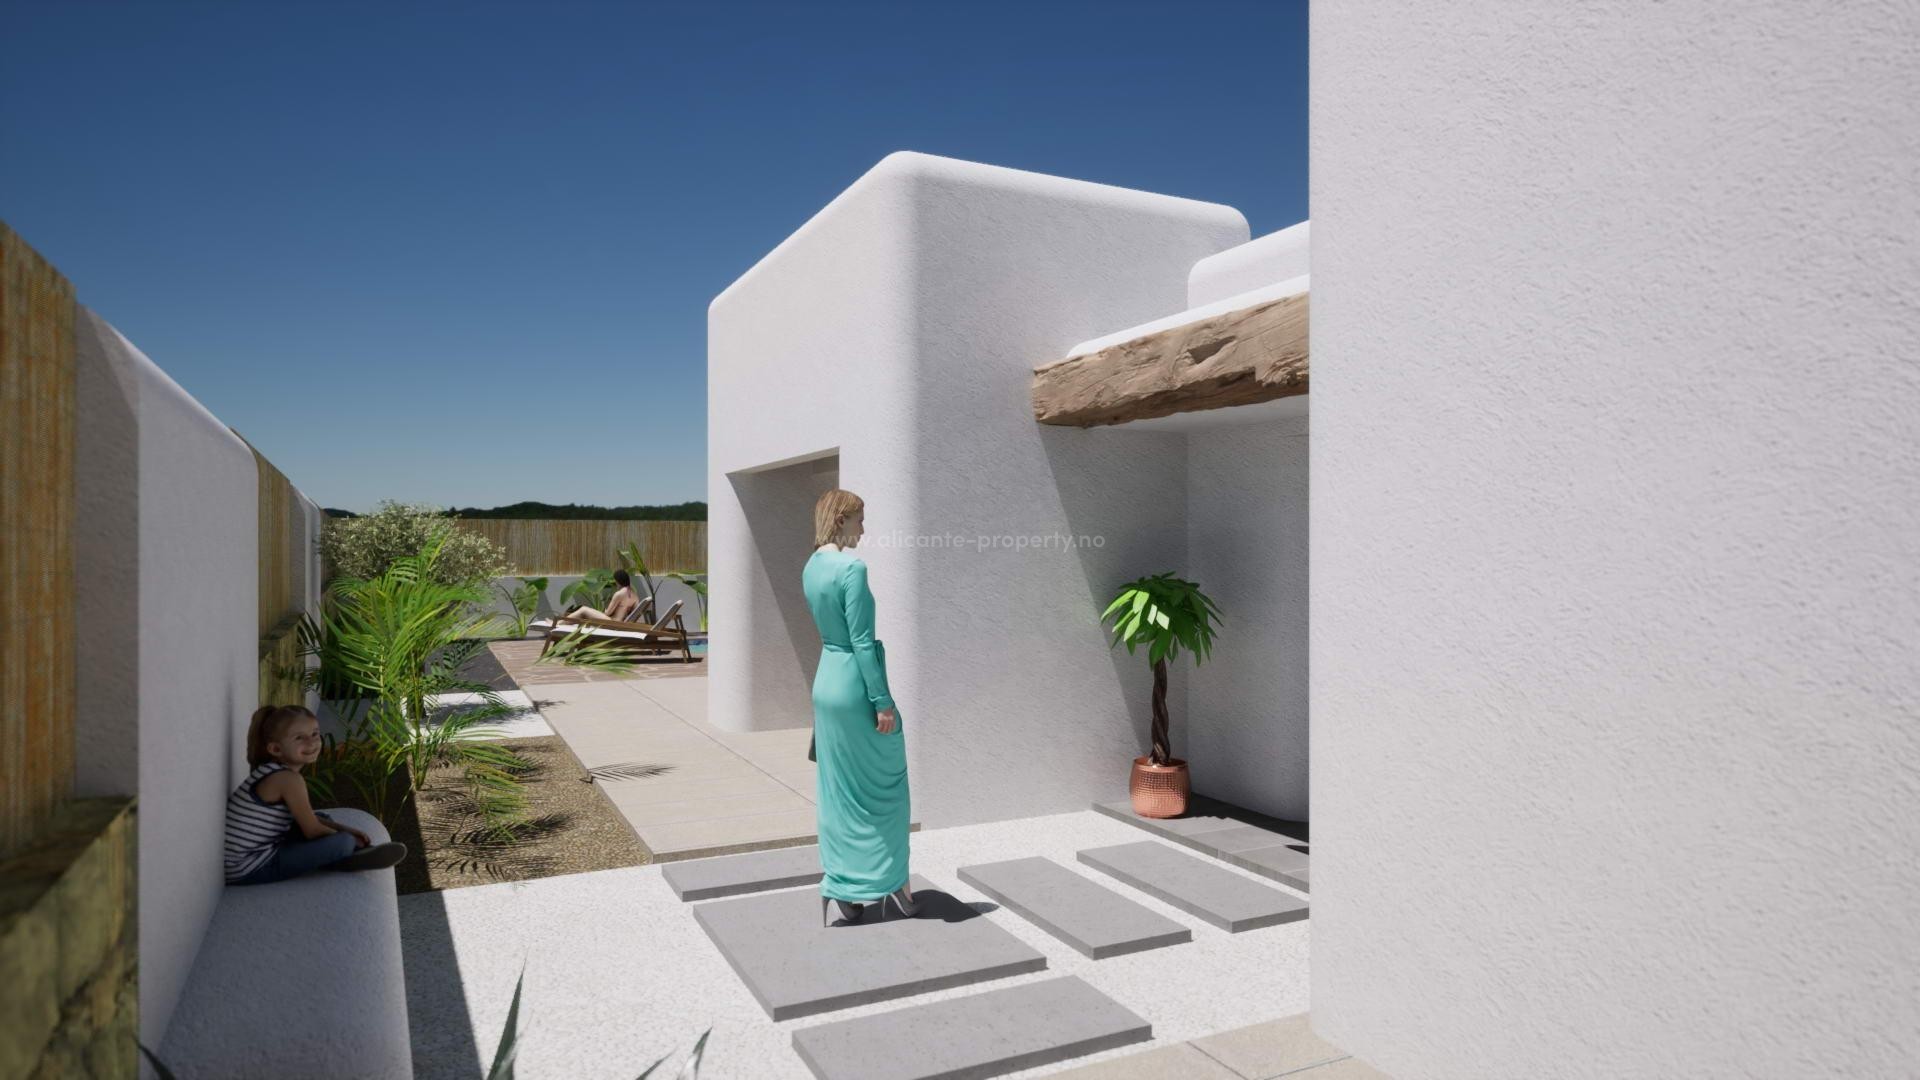 Fantastic new built Ibiza style villas in Alfaz del Pi, 3 bedrooms, 2 bathrooms, nice pool and terrace